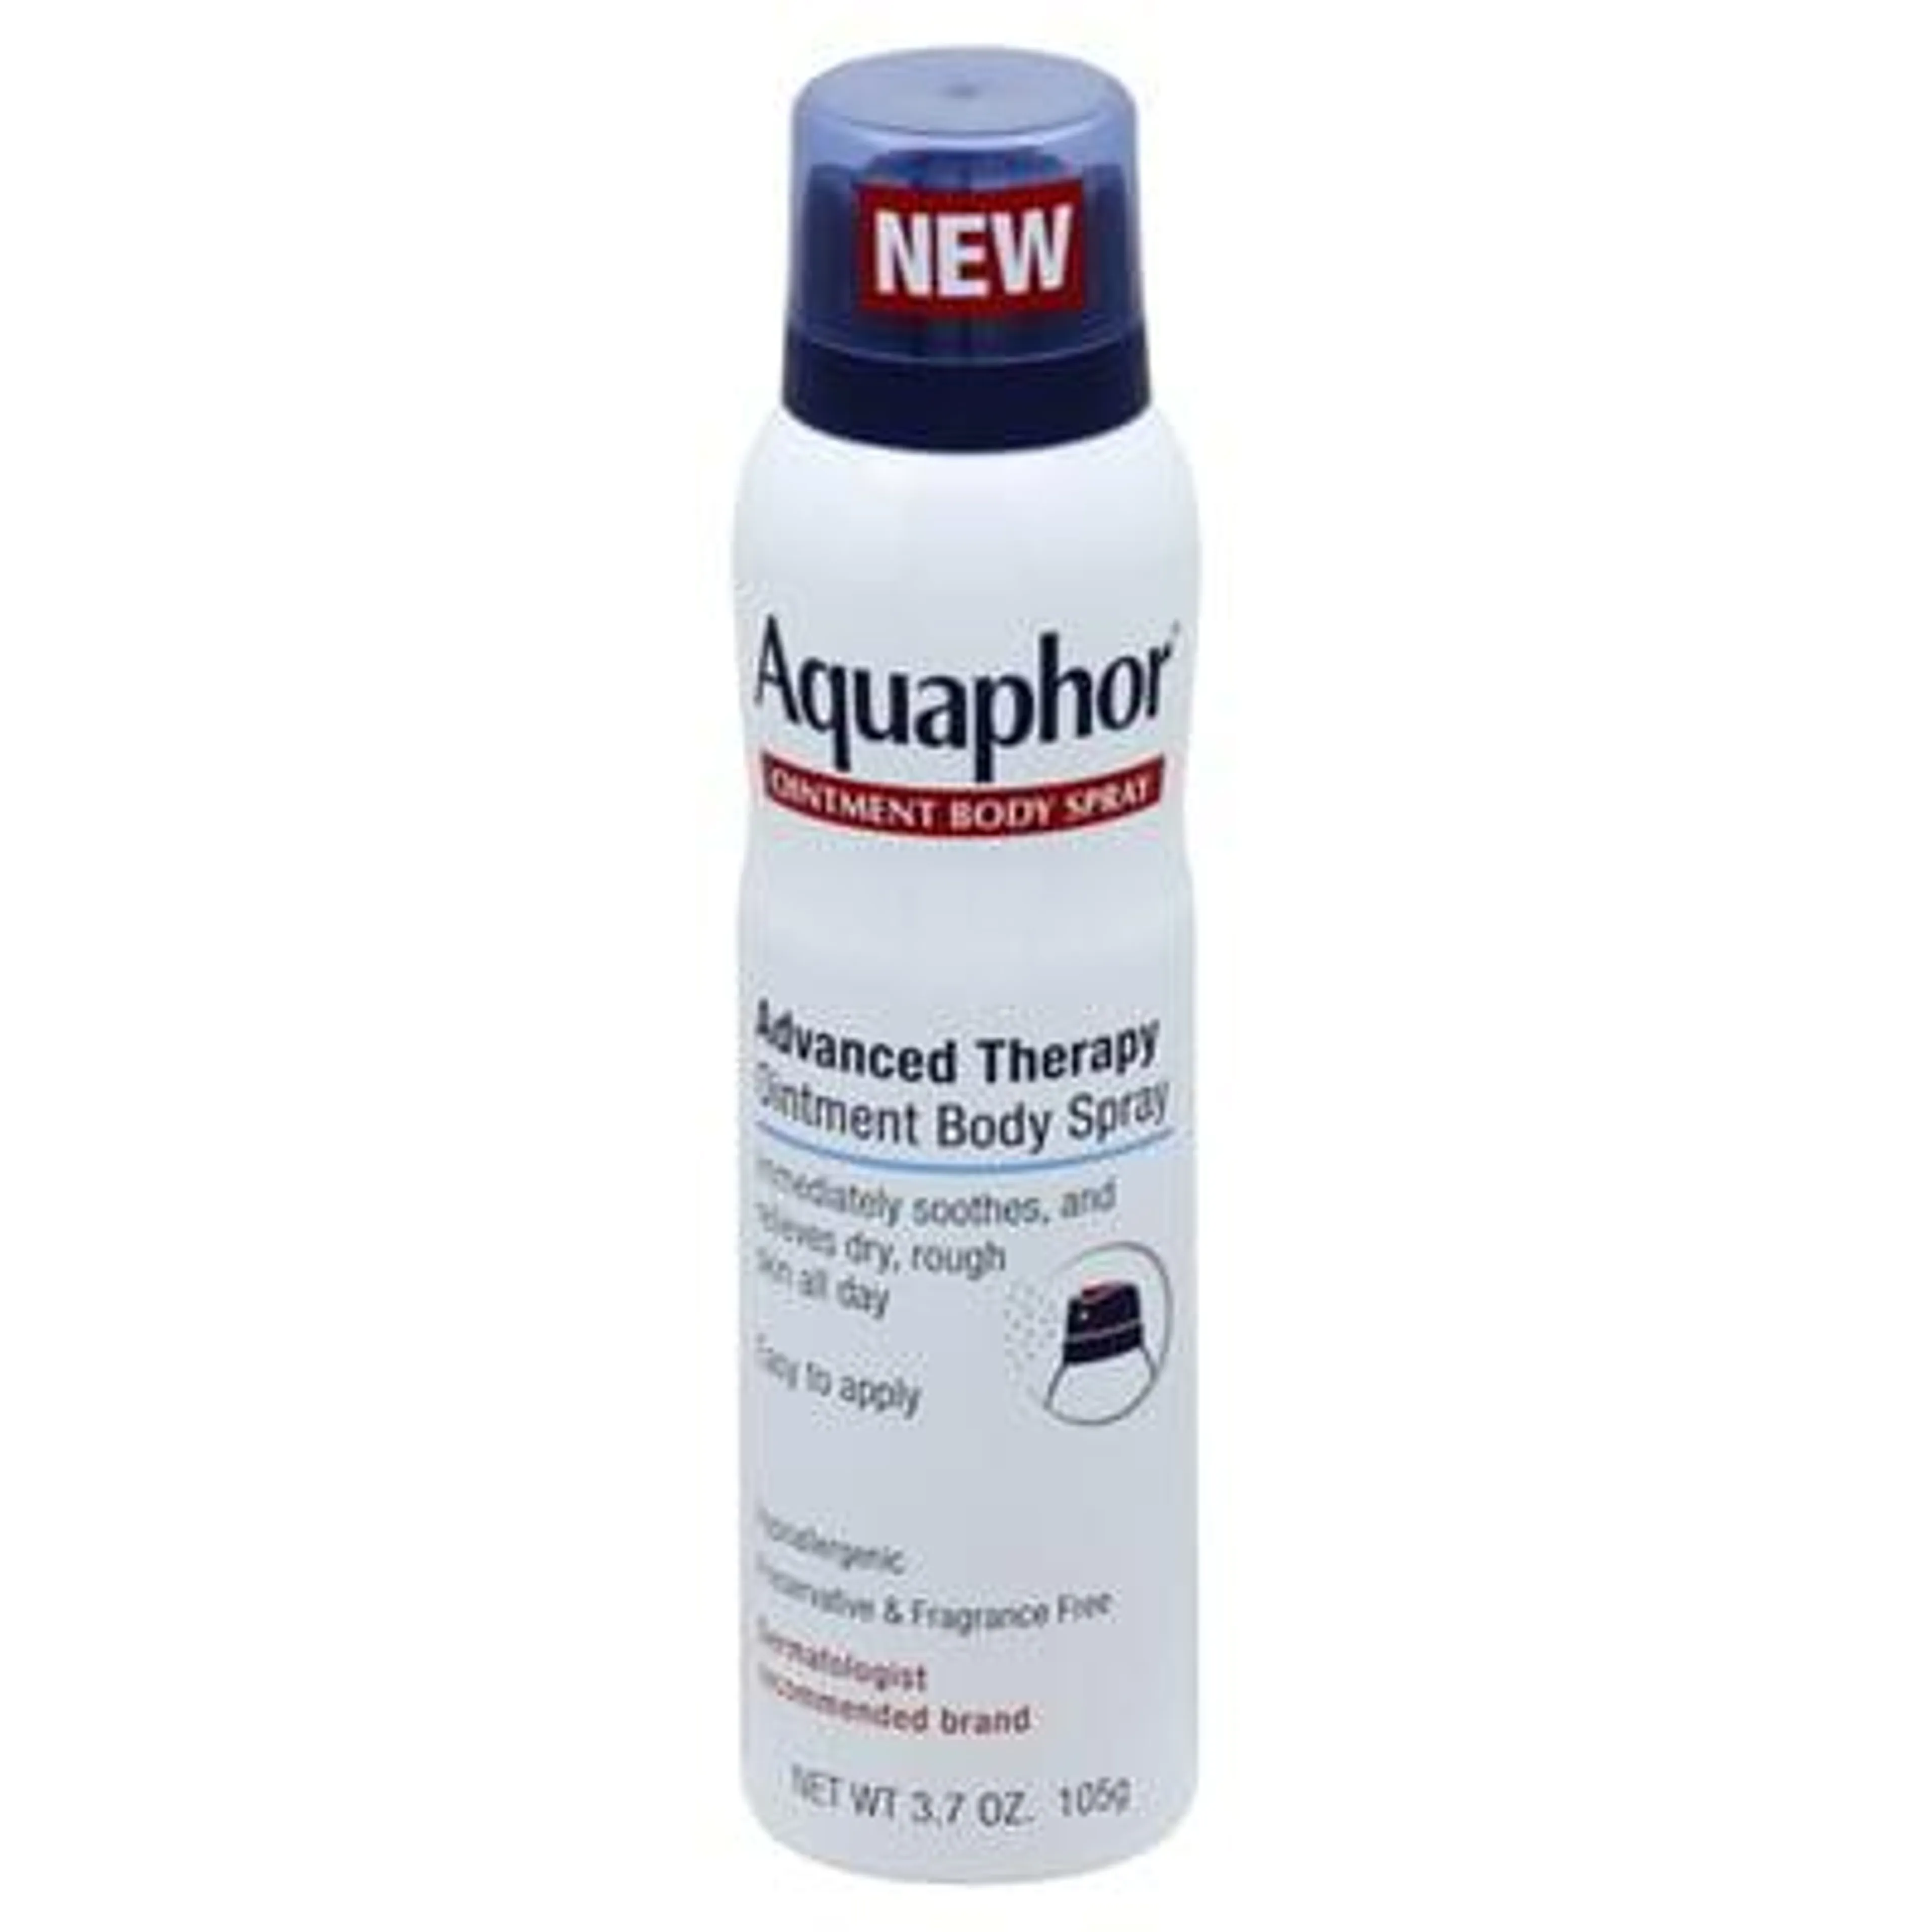 Aquaphor Ointment Body Spray, Advanced Therapy